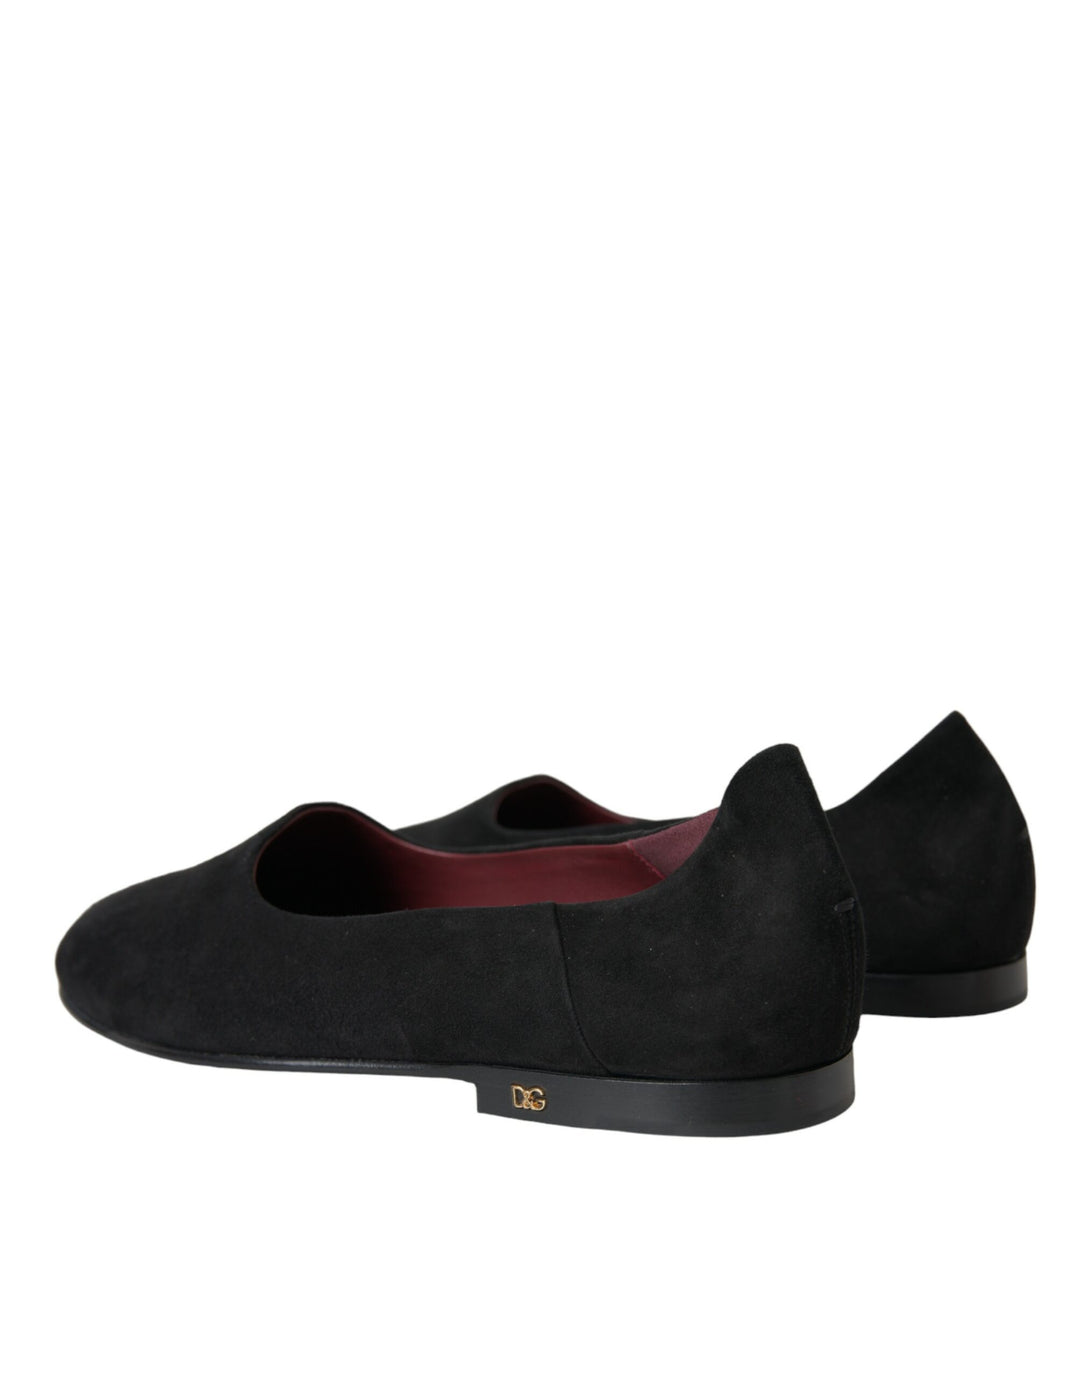 Dolce & Gabbana Black Suede Loafers Formal Dress Slip On Shoes